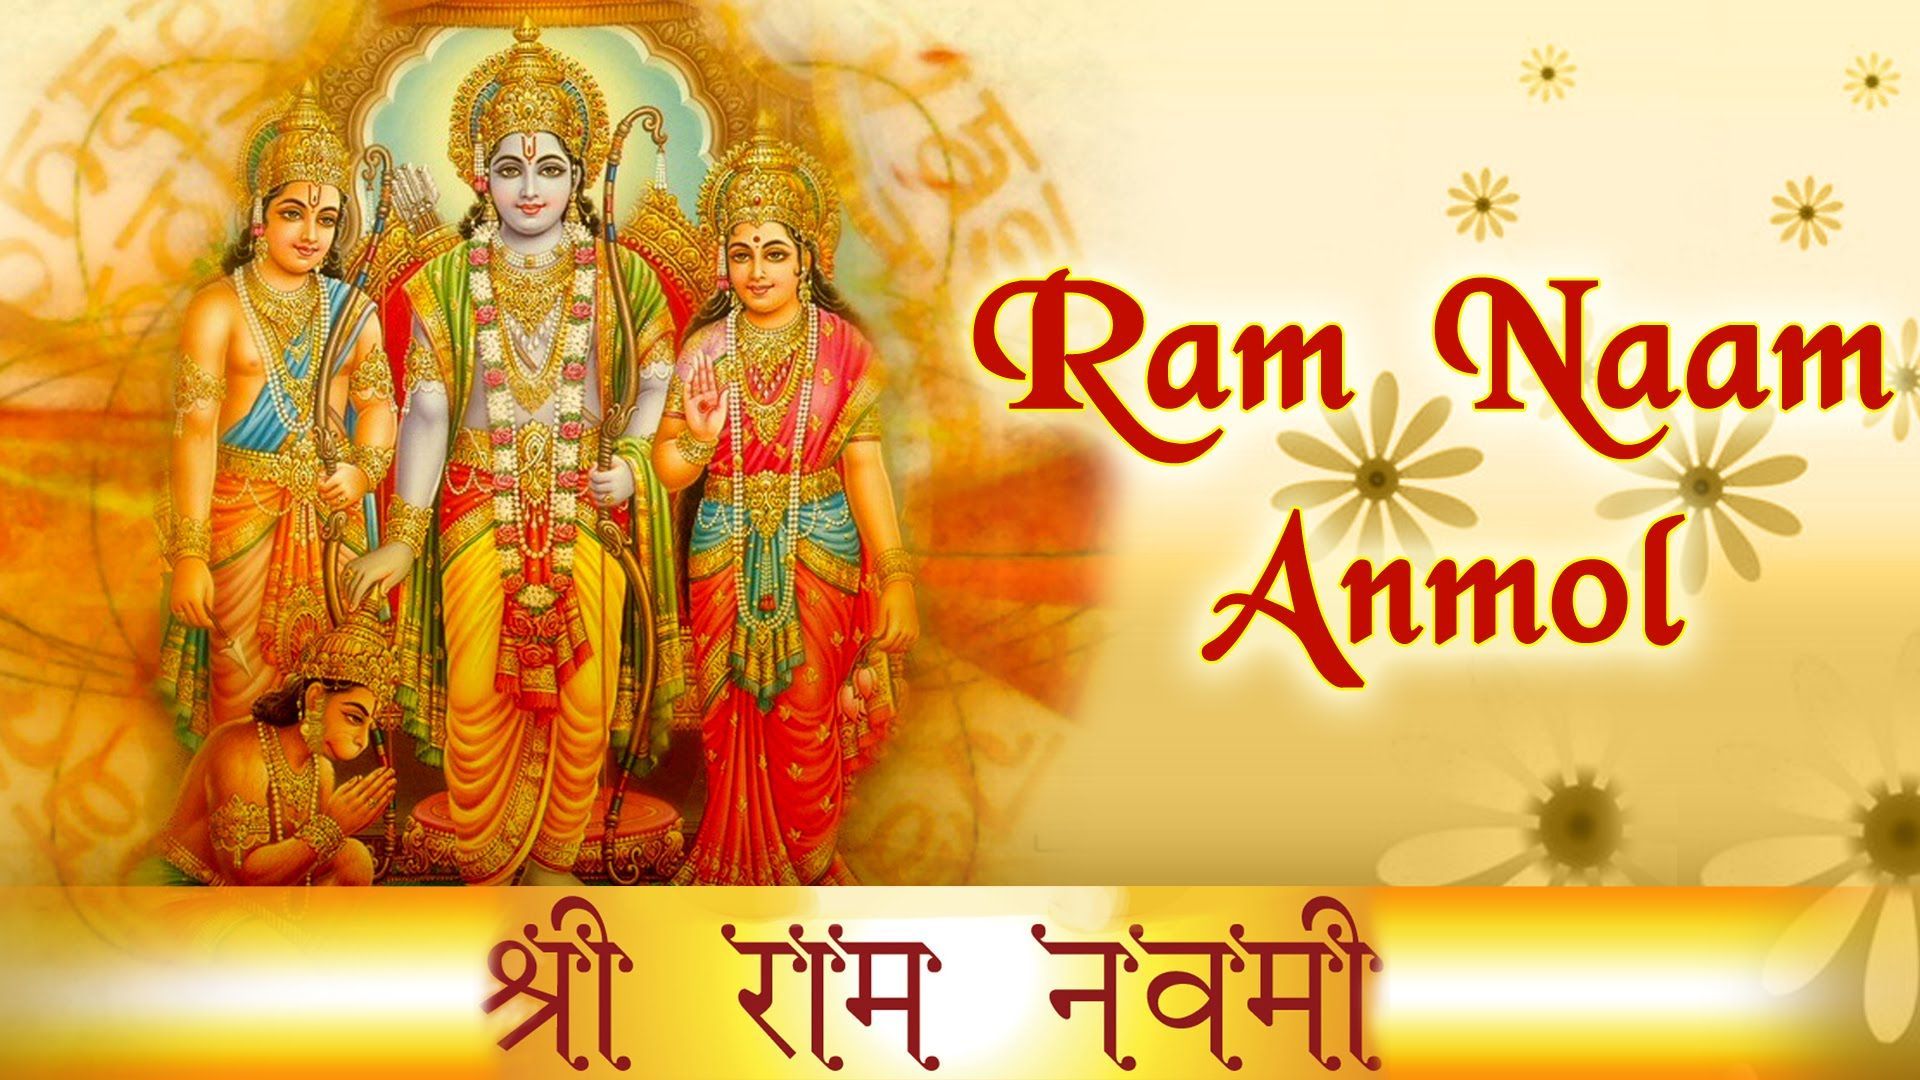 happy ram navami wishes image. Ram wallpaper, Ram navami image